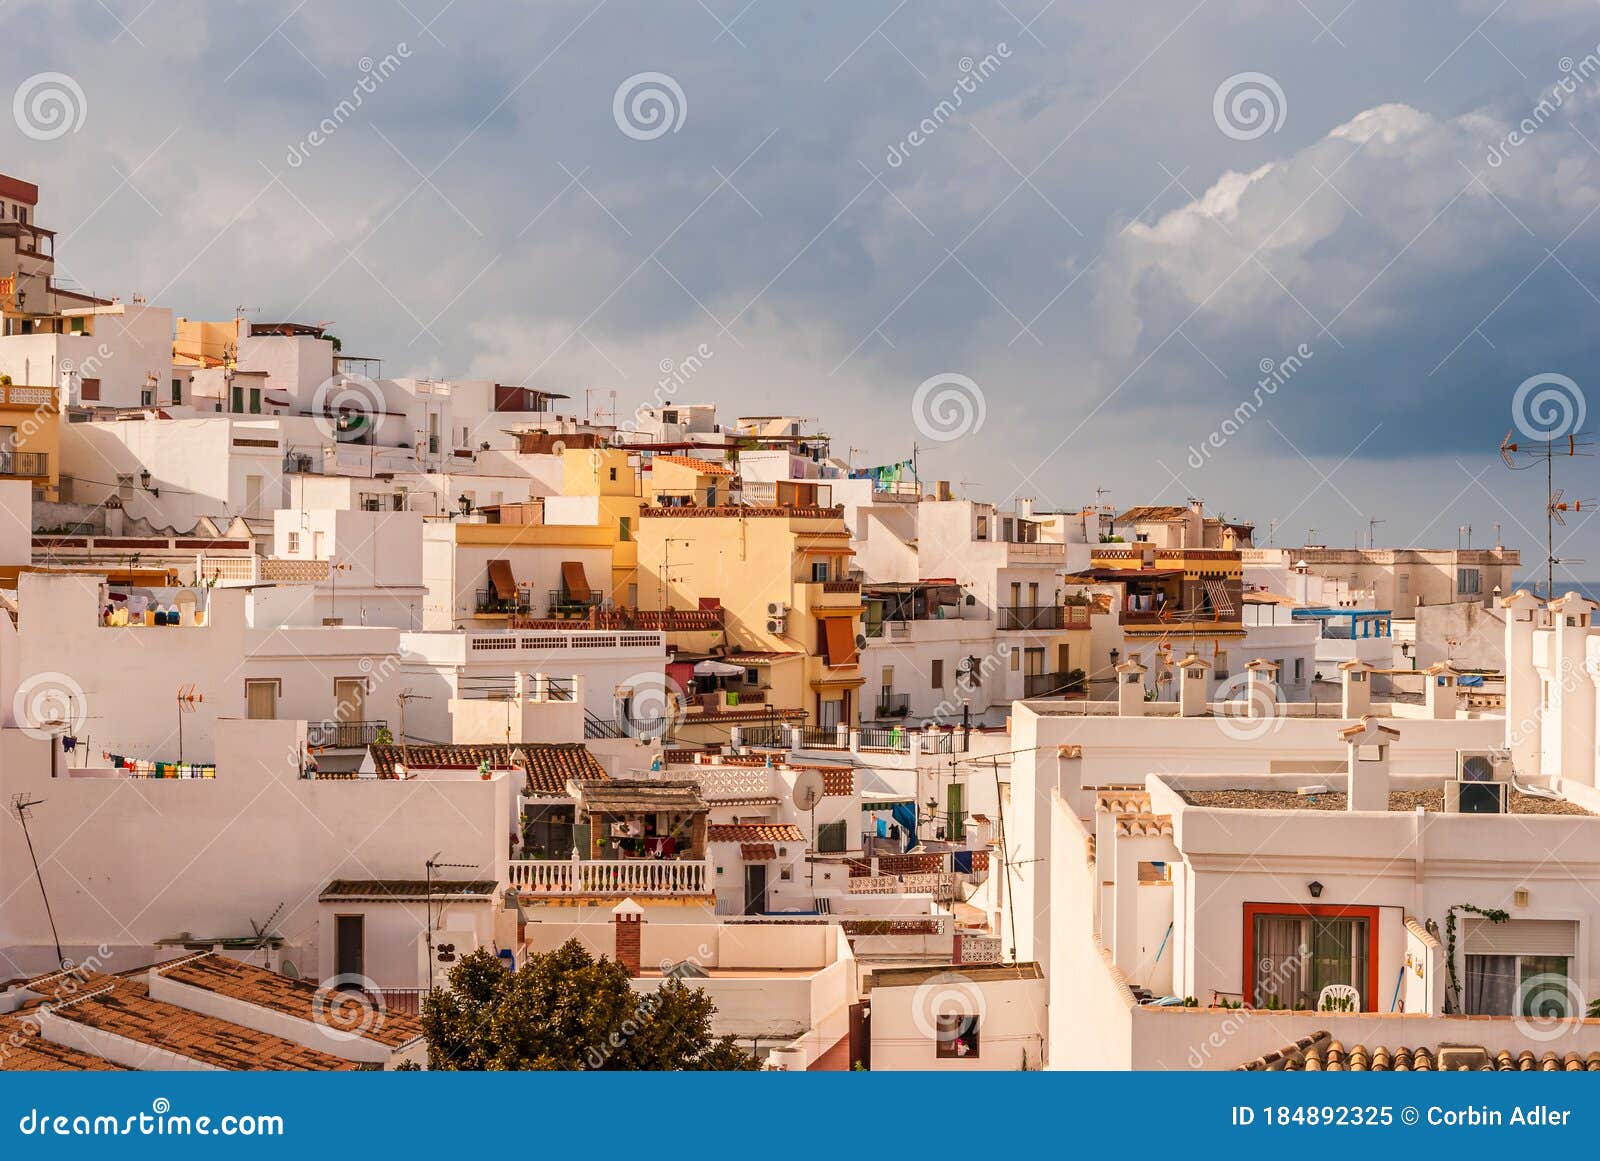 sunlit houses and apartments in the costa tropical town of la herradura, granada, spain